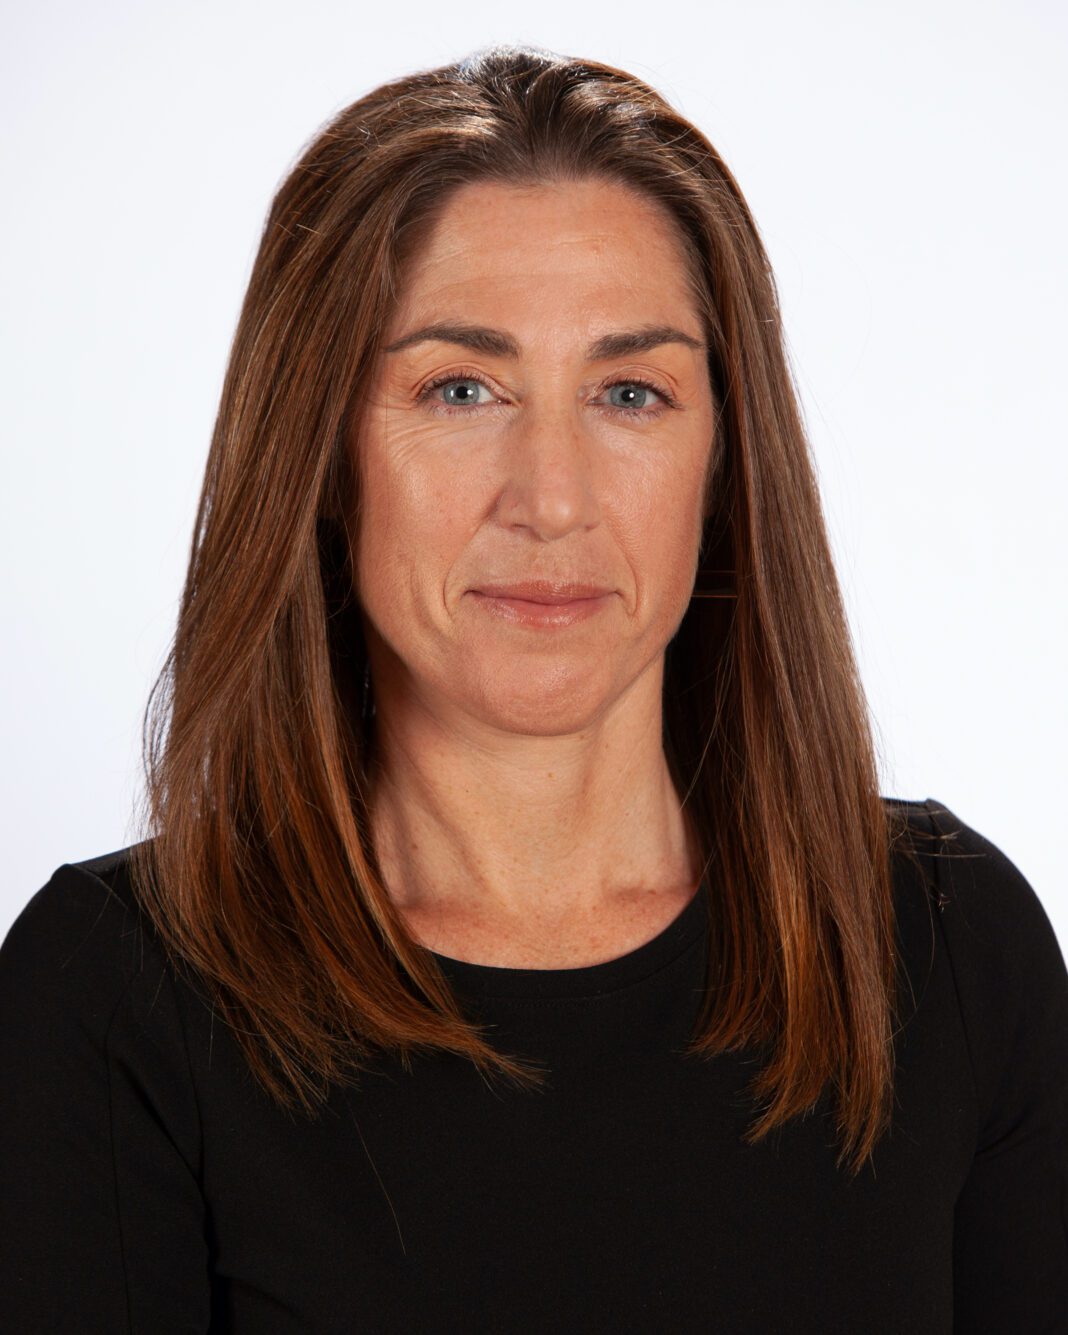 Dr. Erica Bisson